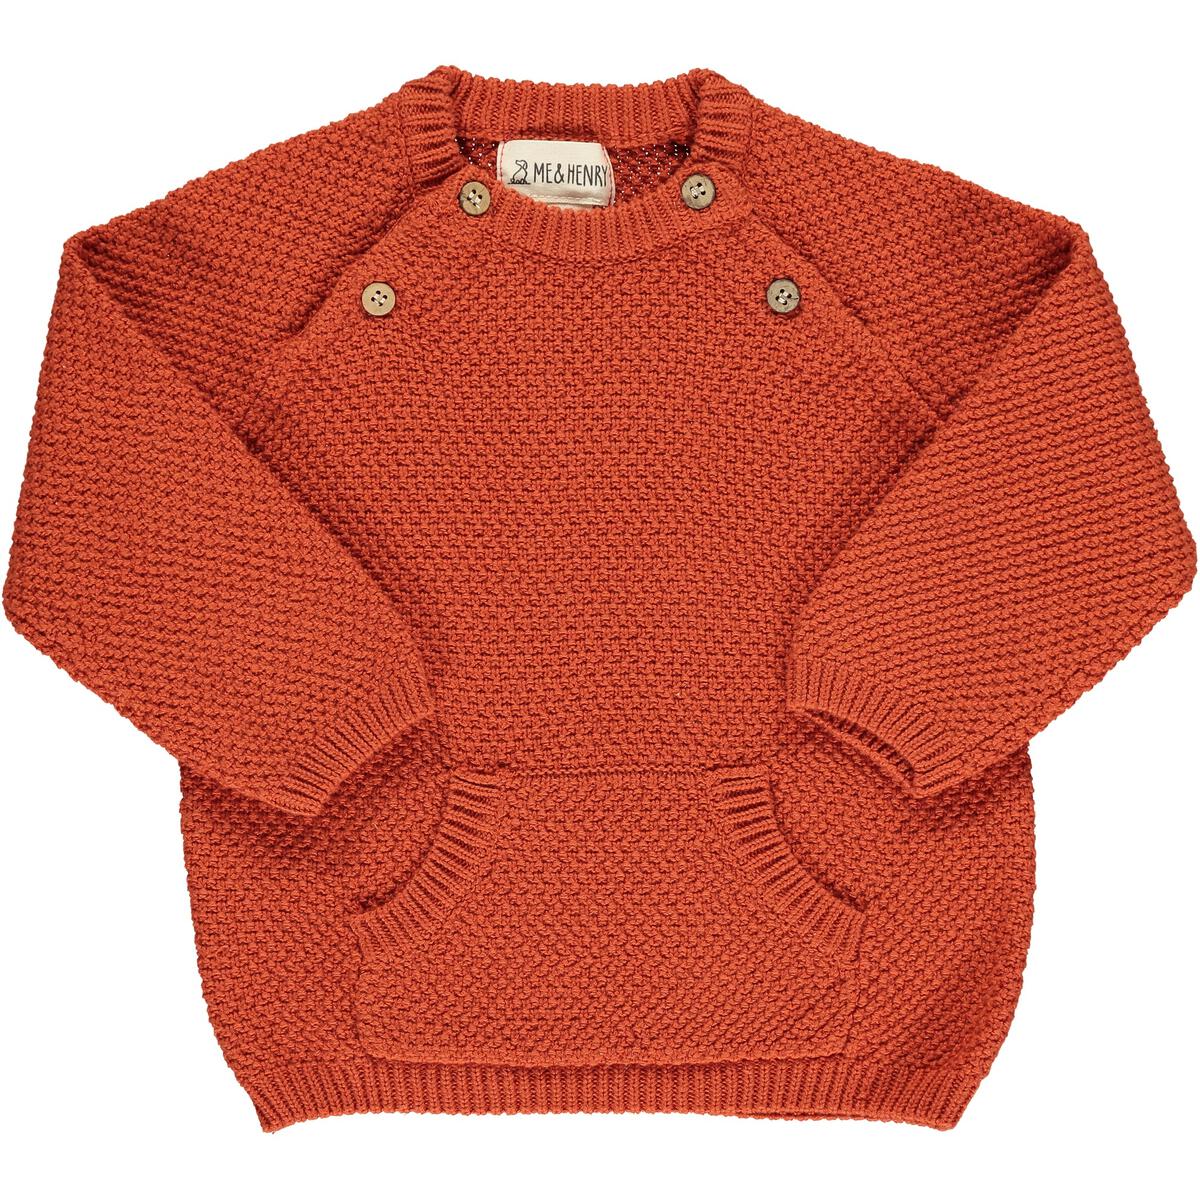 Morrison Baby Sweater in Rust